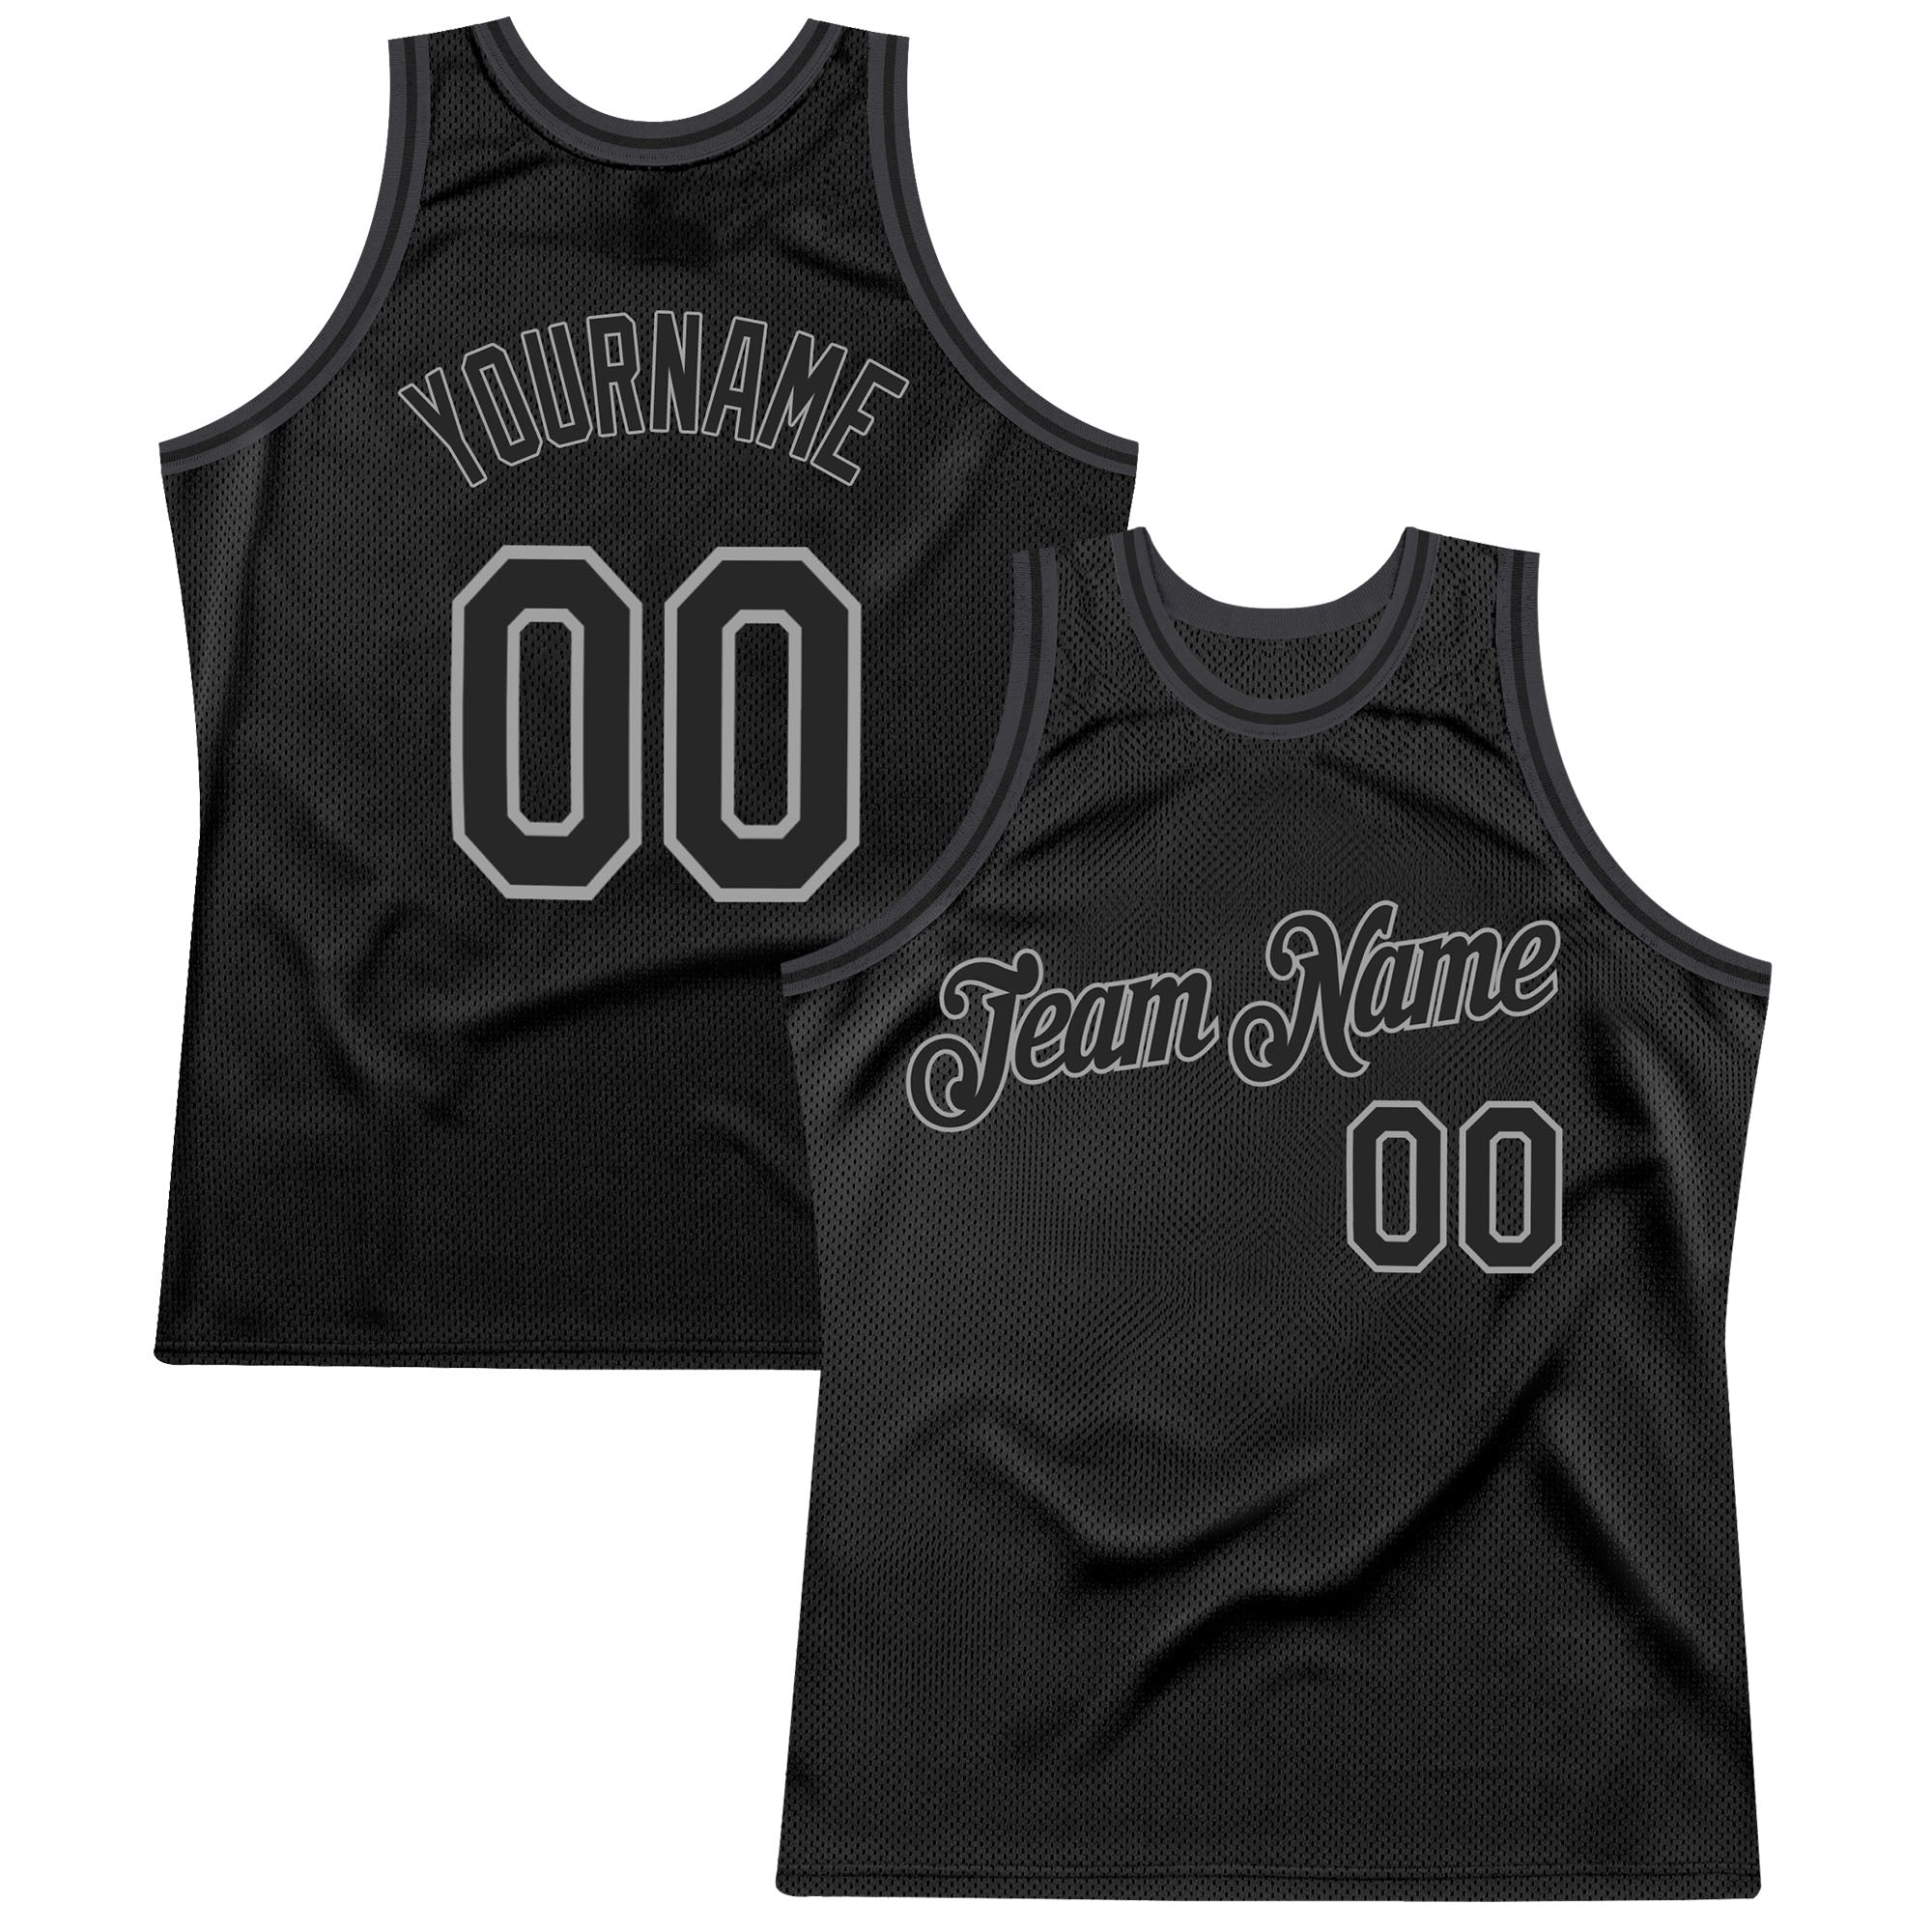 FIITG Custom Basketball Jersey Black Gray Authentic Throwback Men's Size:3XL